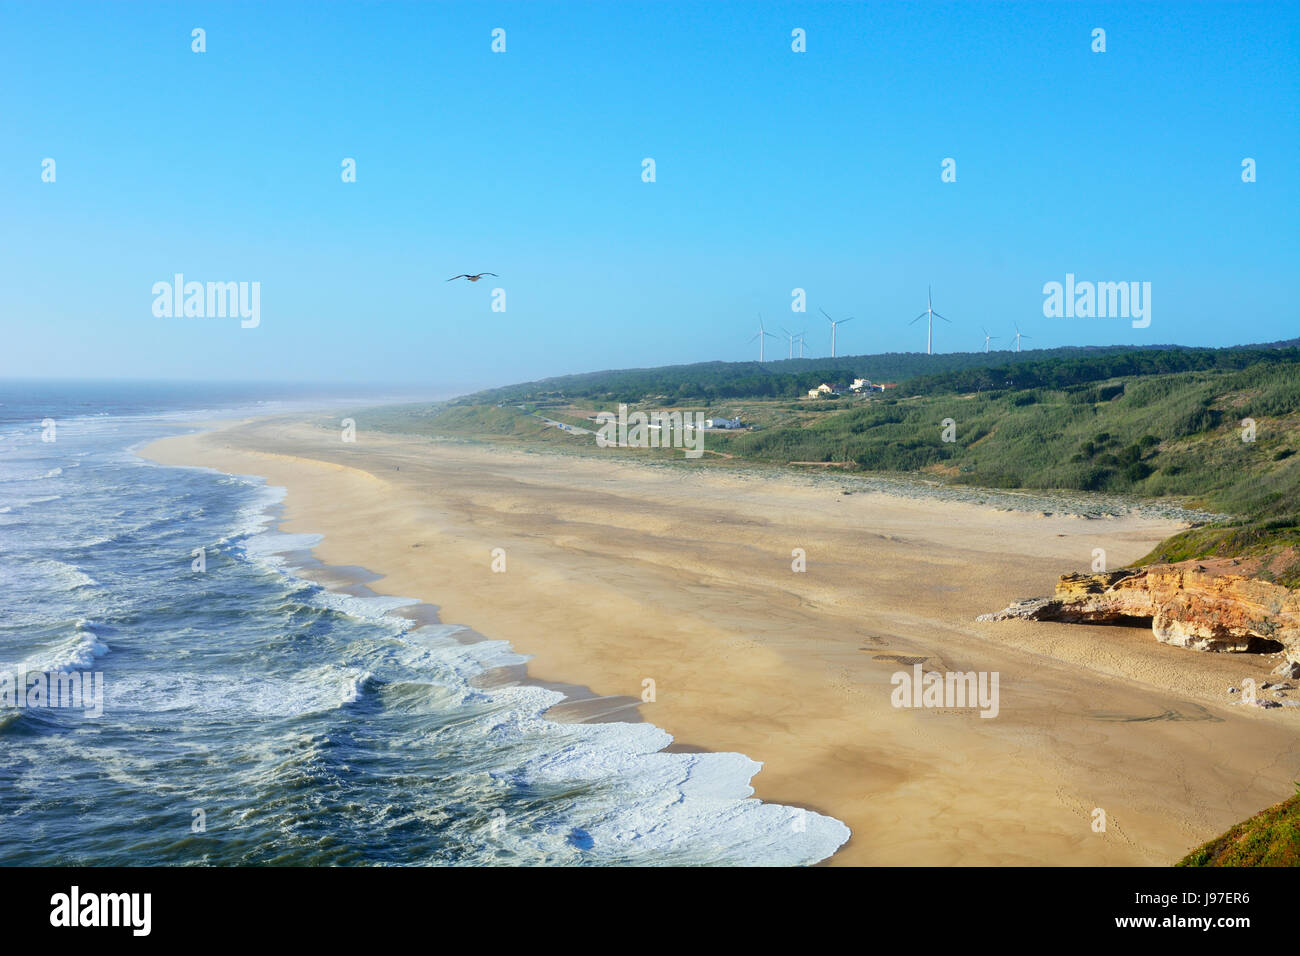 Praia do Norte beach in front of the Atlantic Ocean. Nazare, Portugal Stock Photo